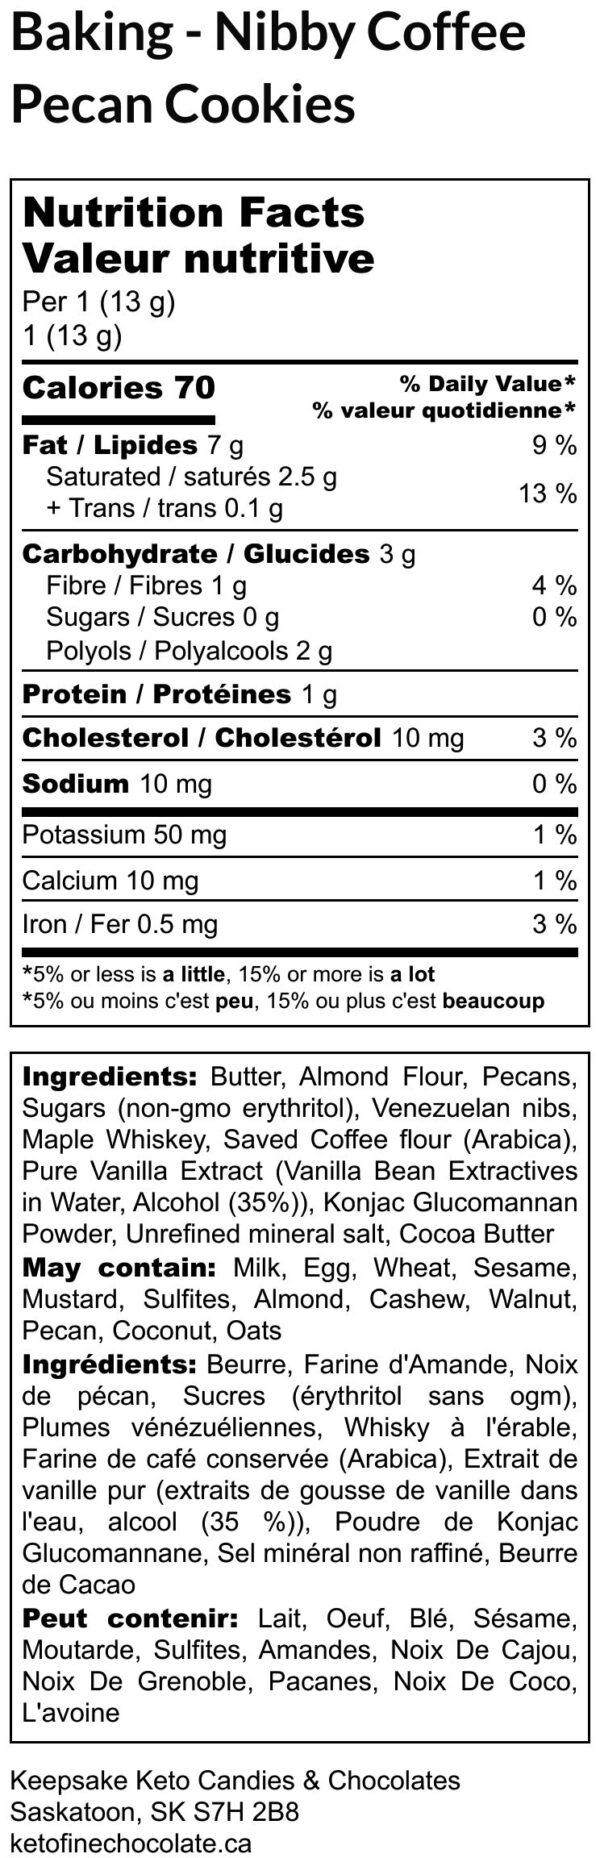 image: Nutritional info - Nibby Coffee Pecan